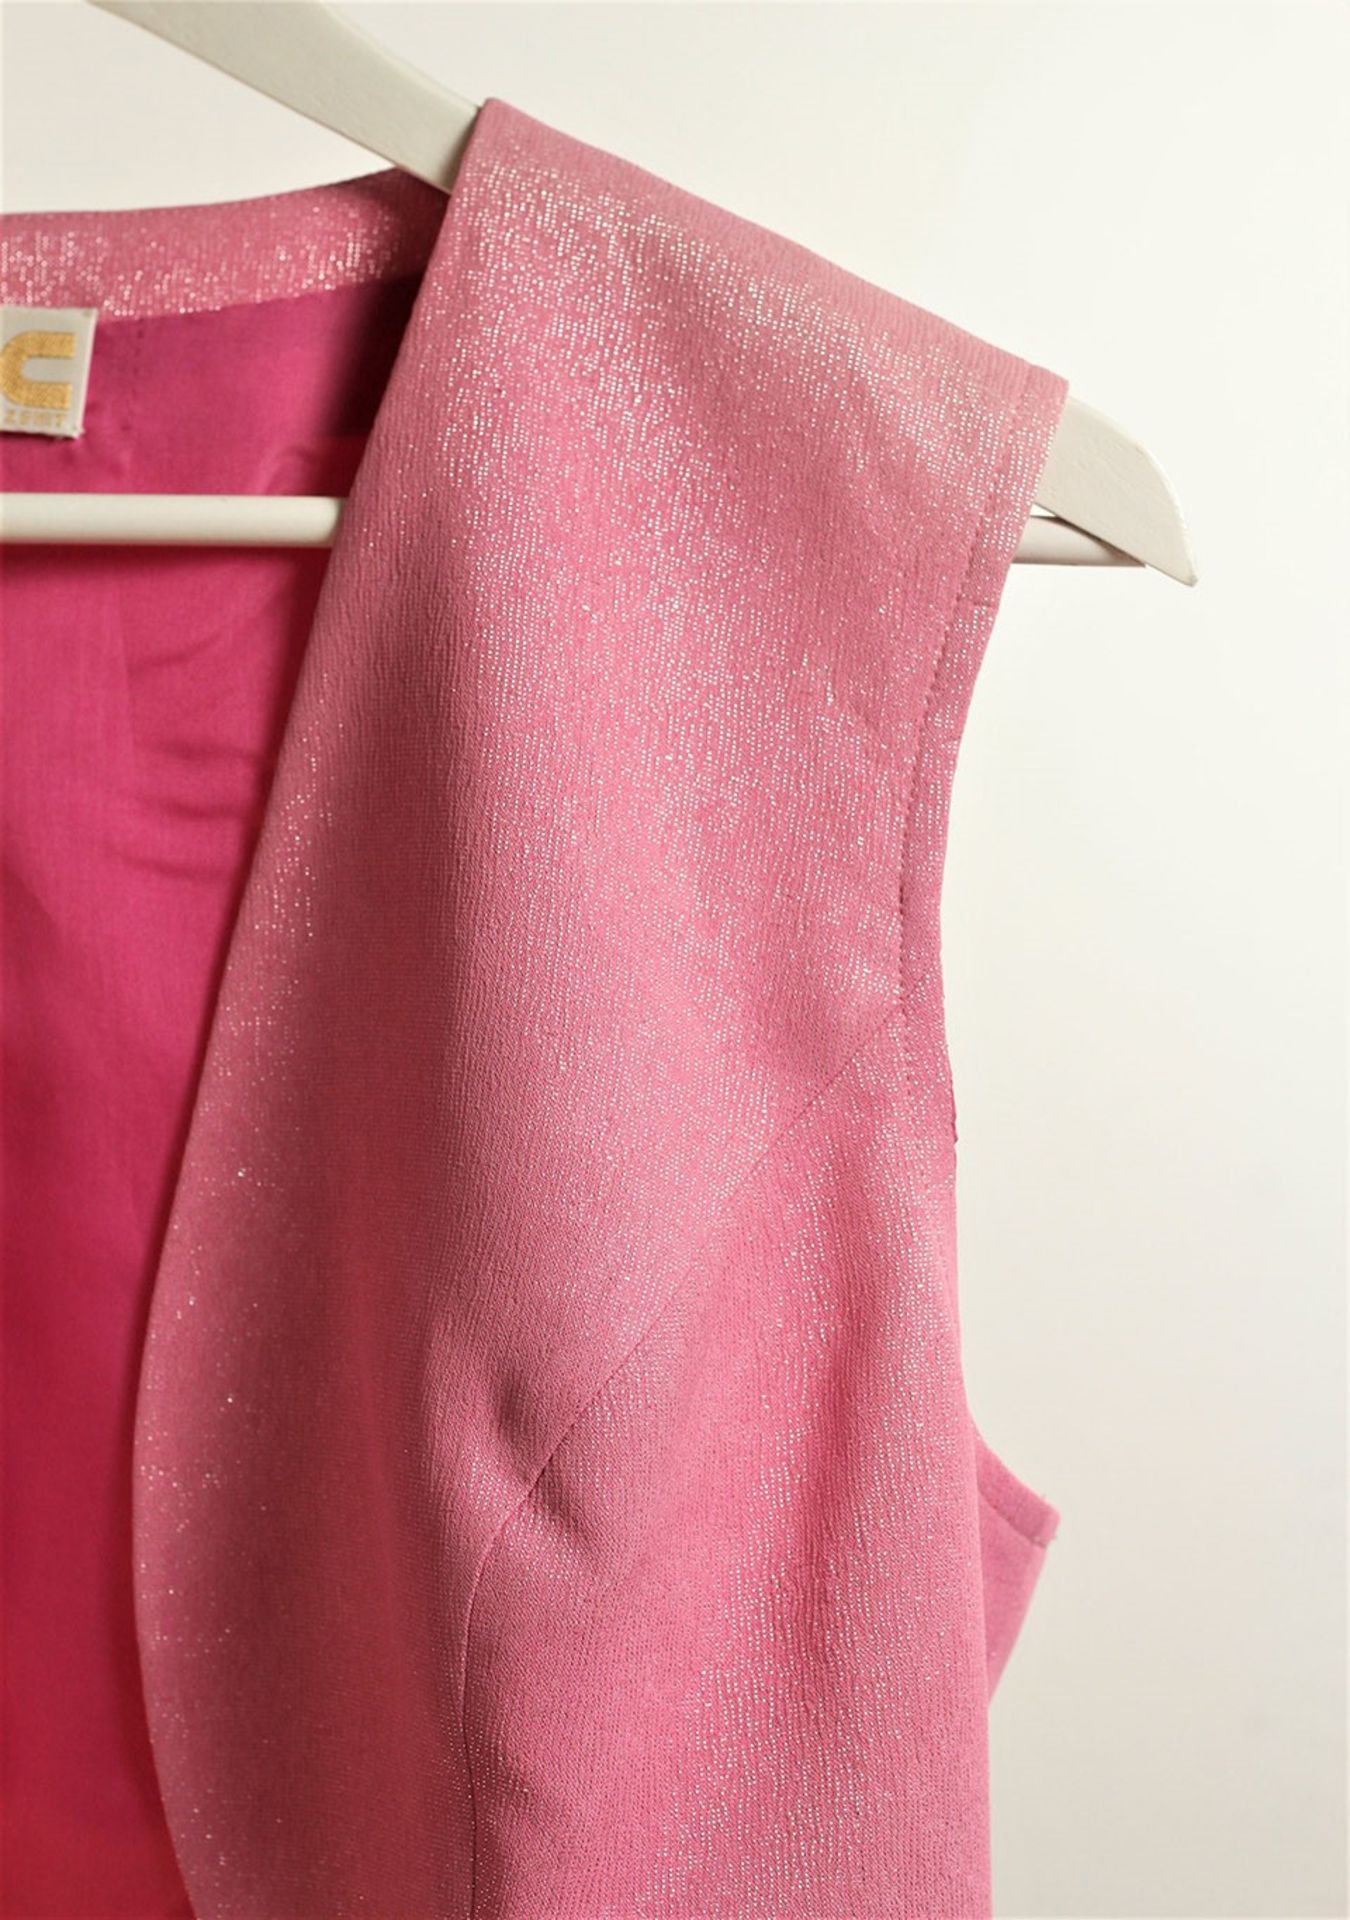 1 x Boutique Le Duc Pink Waistcoat - Size: L - Material: 49% Cotton, 40% Acetate, 11% Poly metal - Image 3 of 7